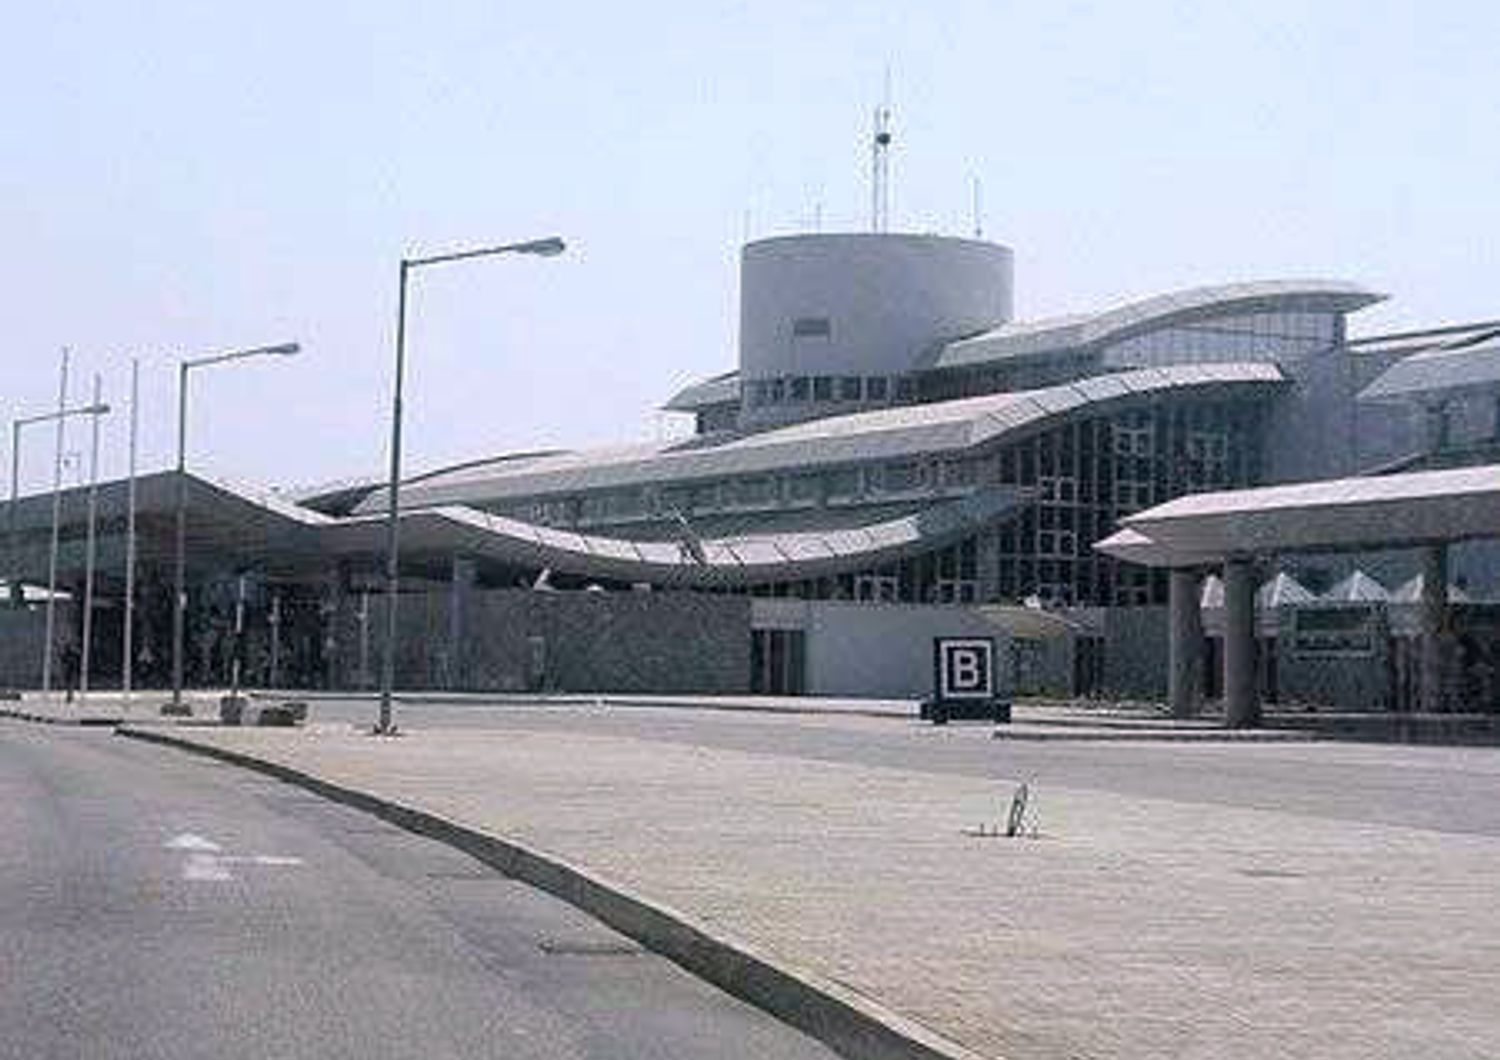 Abuja aeroporto&nbsp;